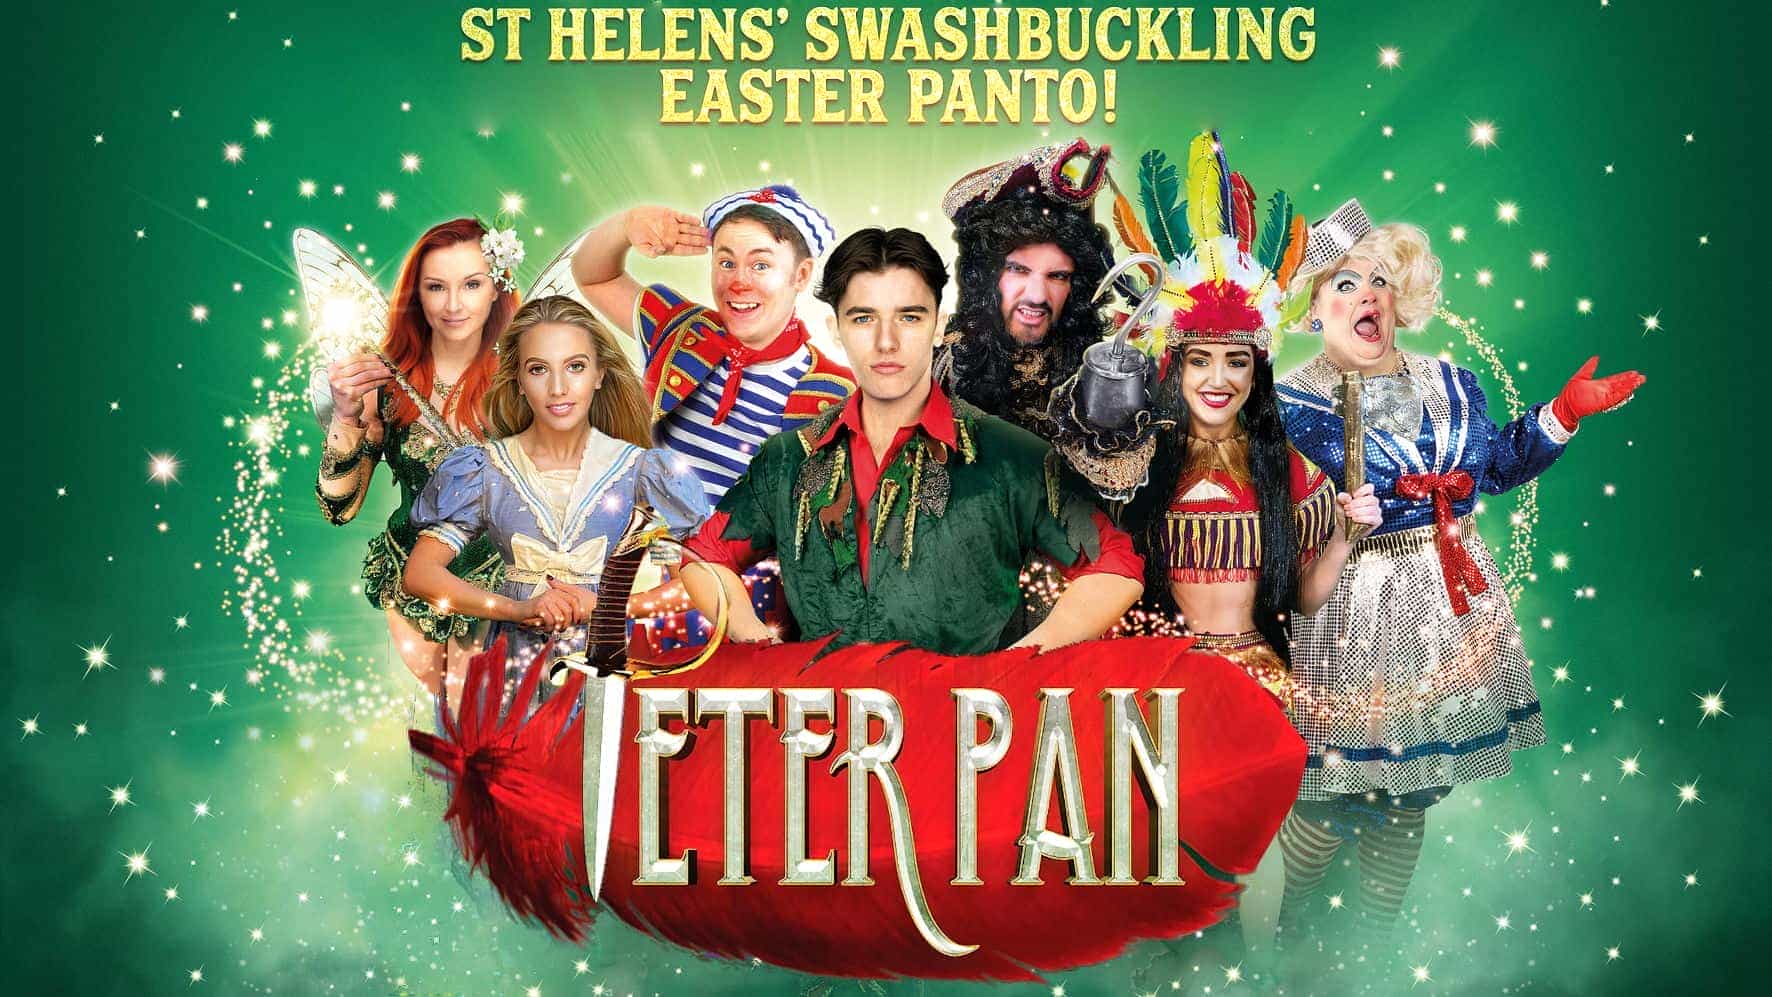 Peter Pan - Easter Panto 2022